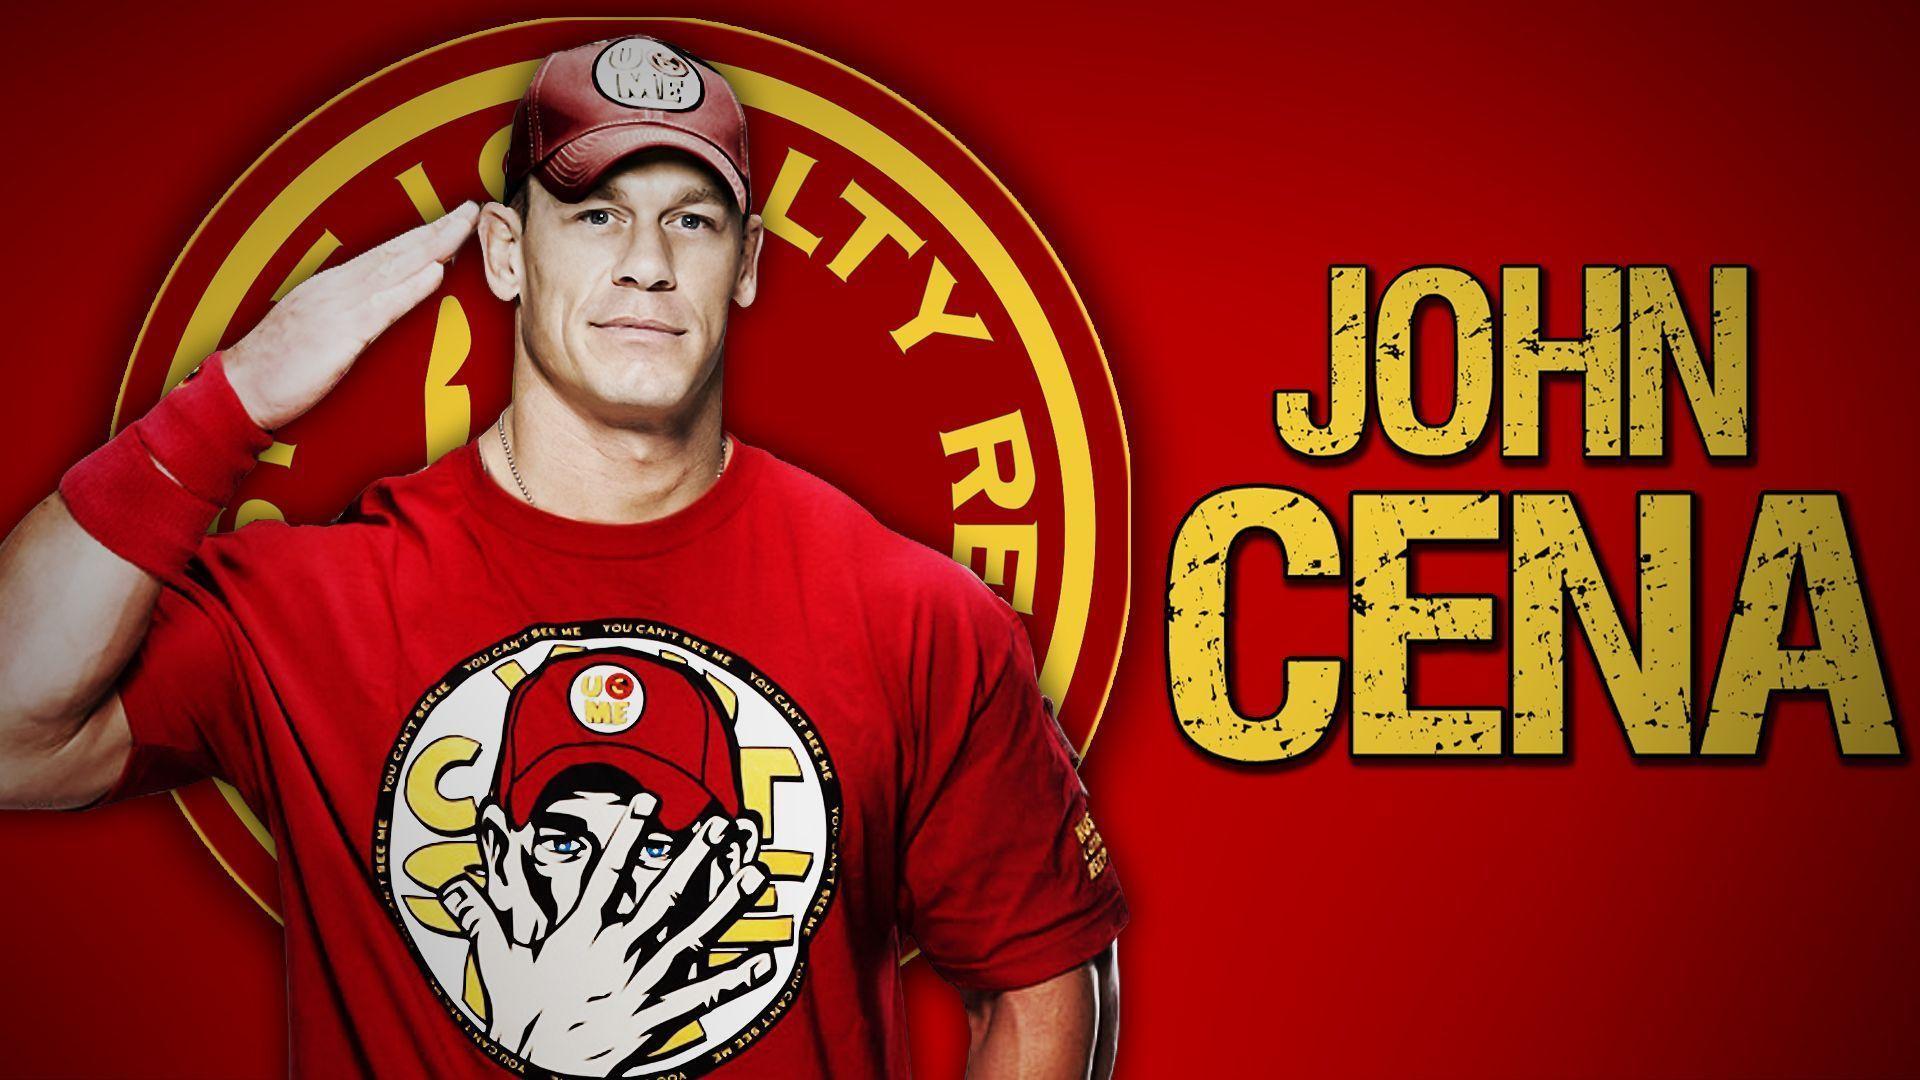 John Cena HD Wallpaper And Image 2015 Free Download